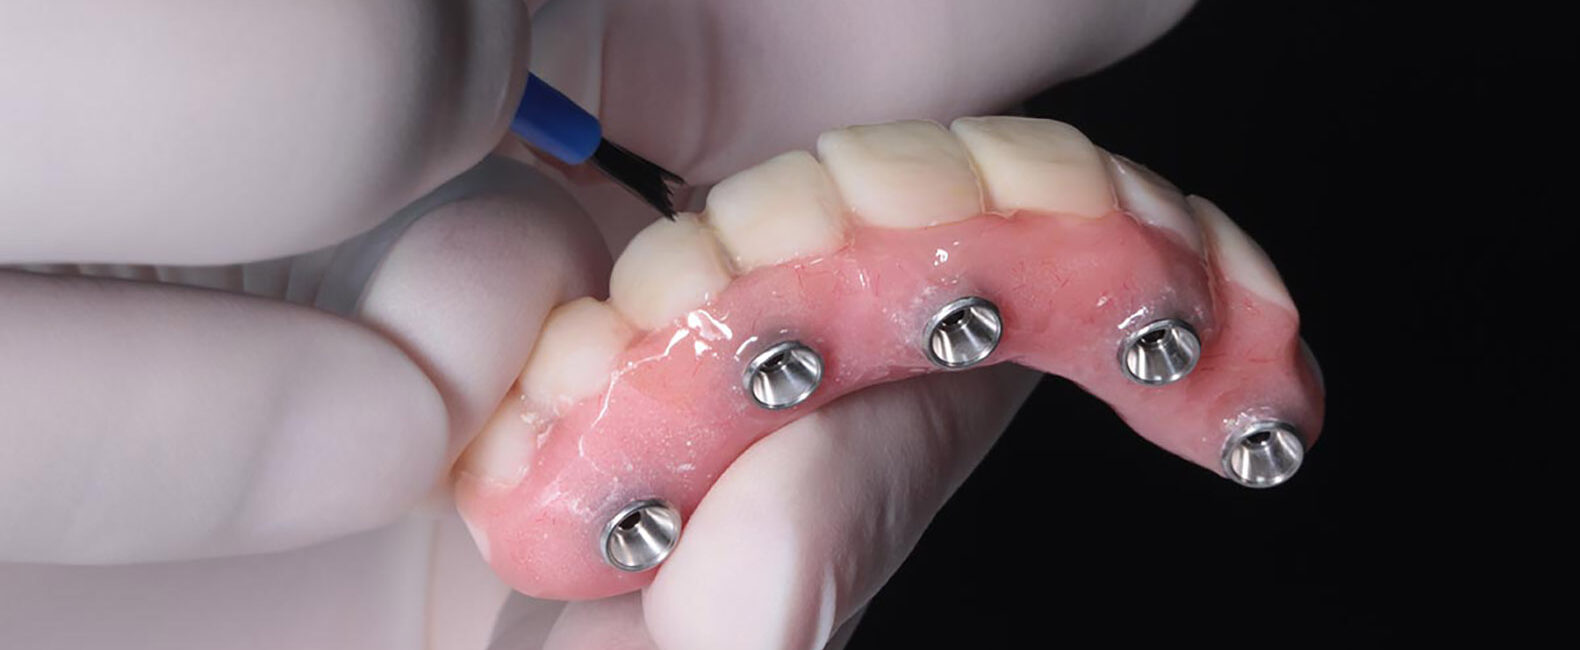 all-on-four dental implants